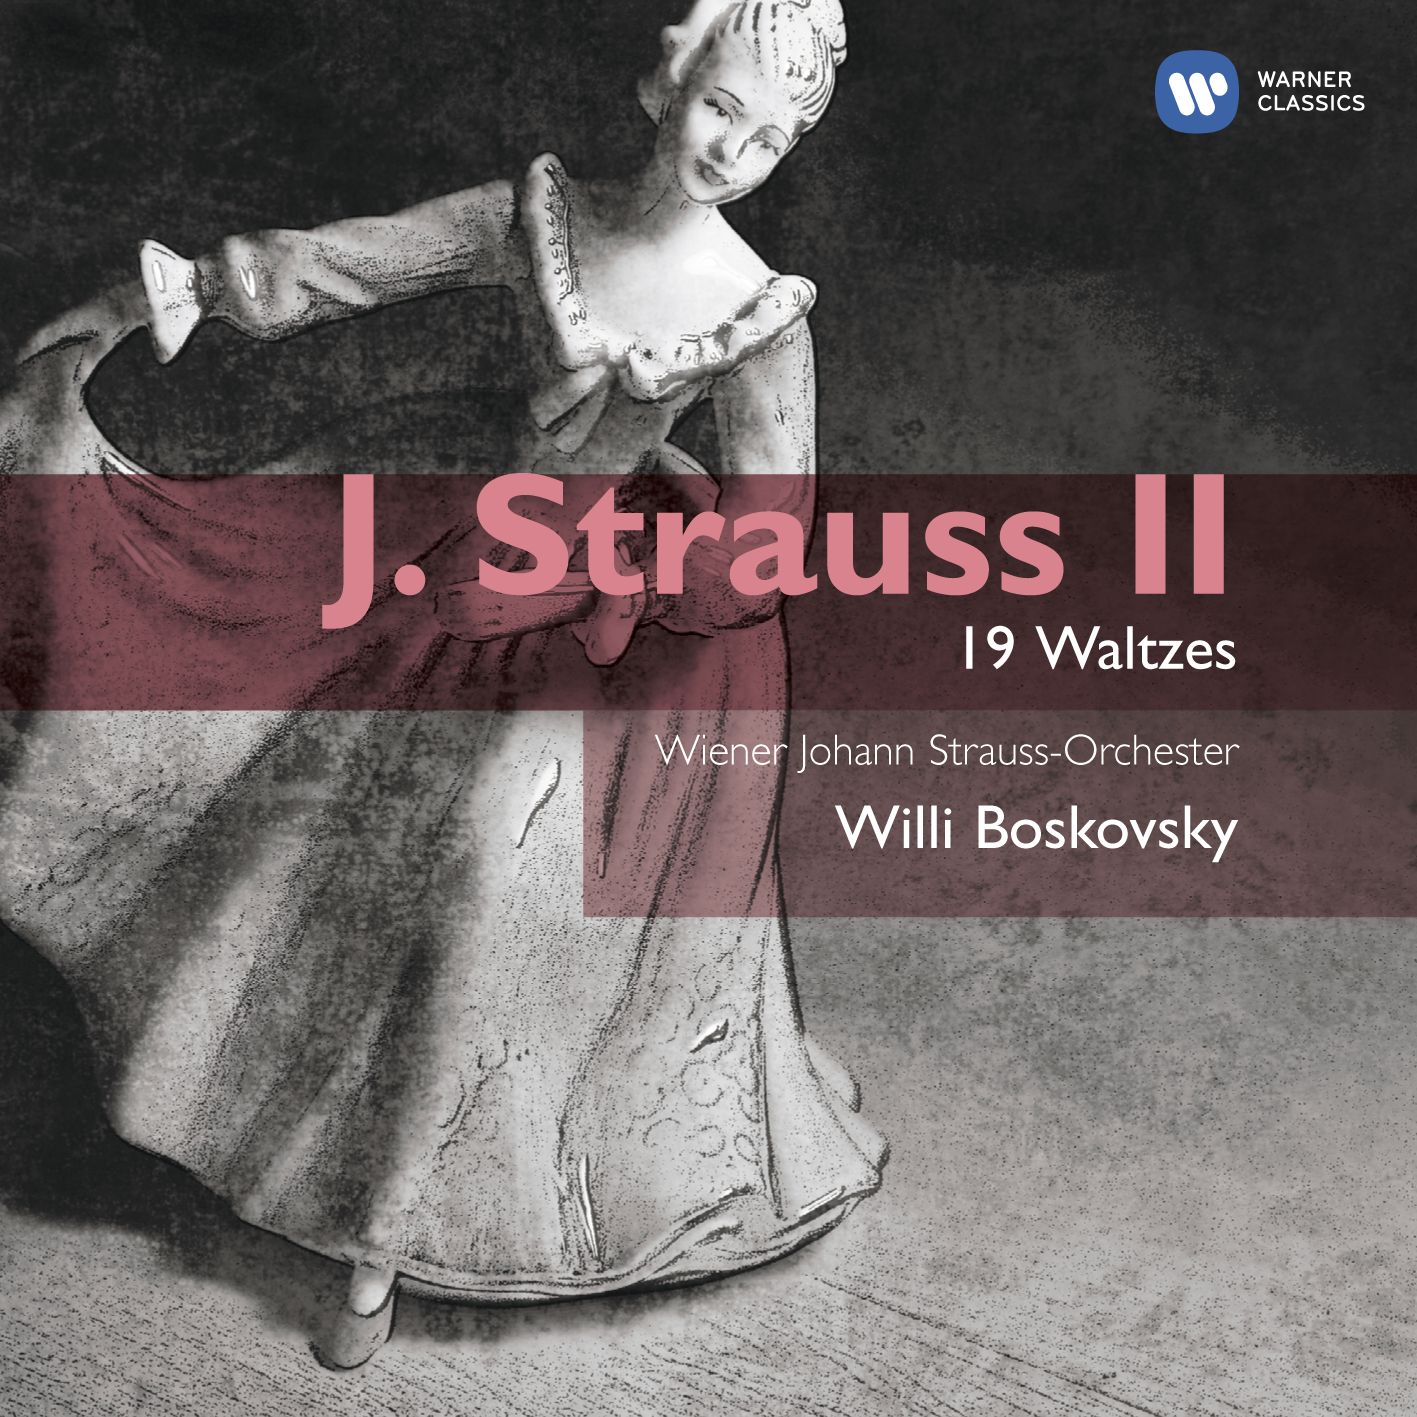 Strauss II: 19 Waltzes